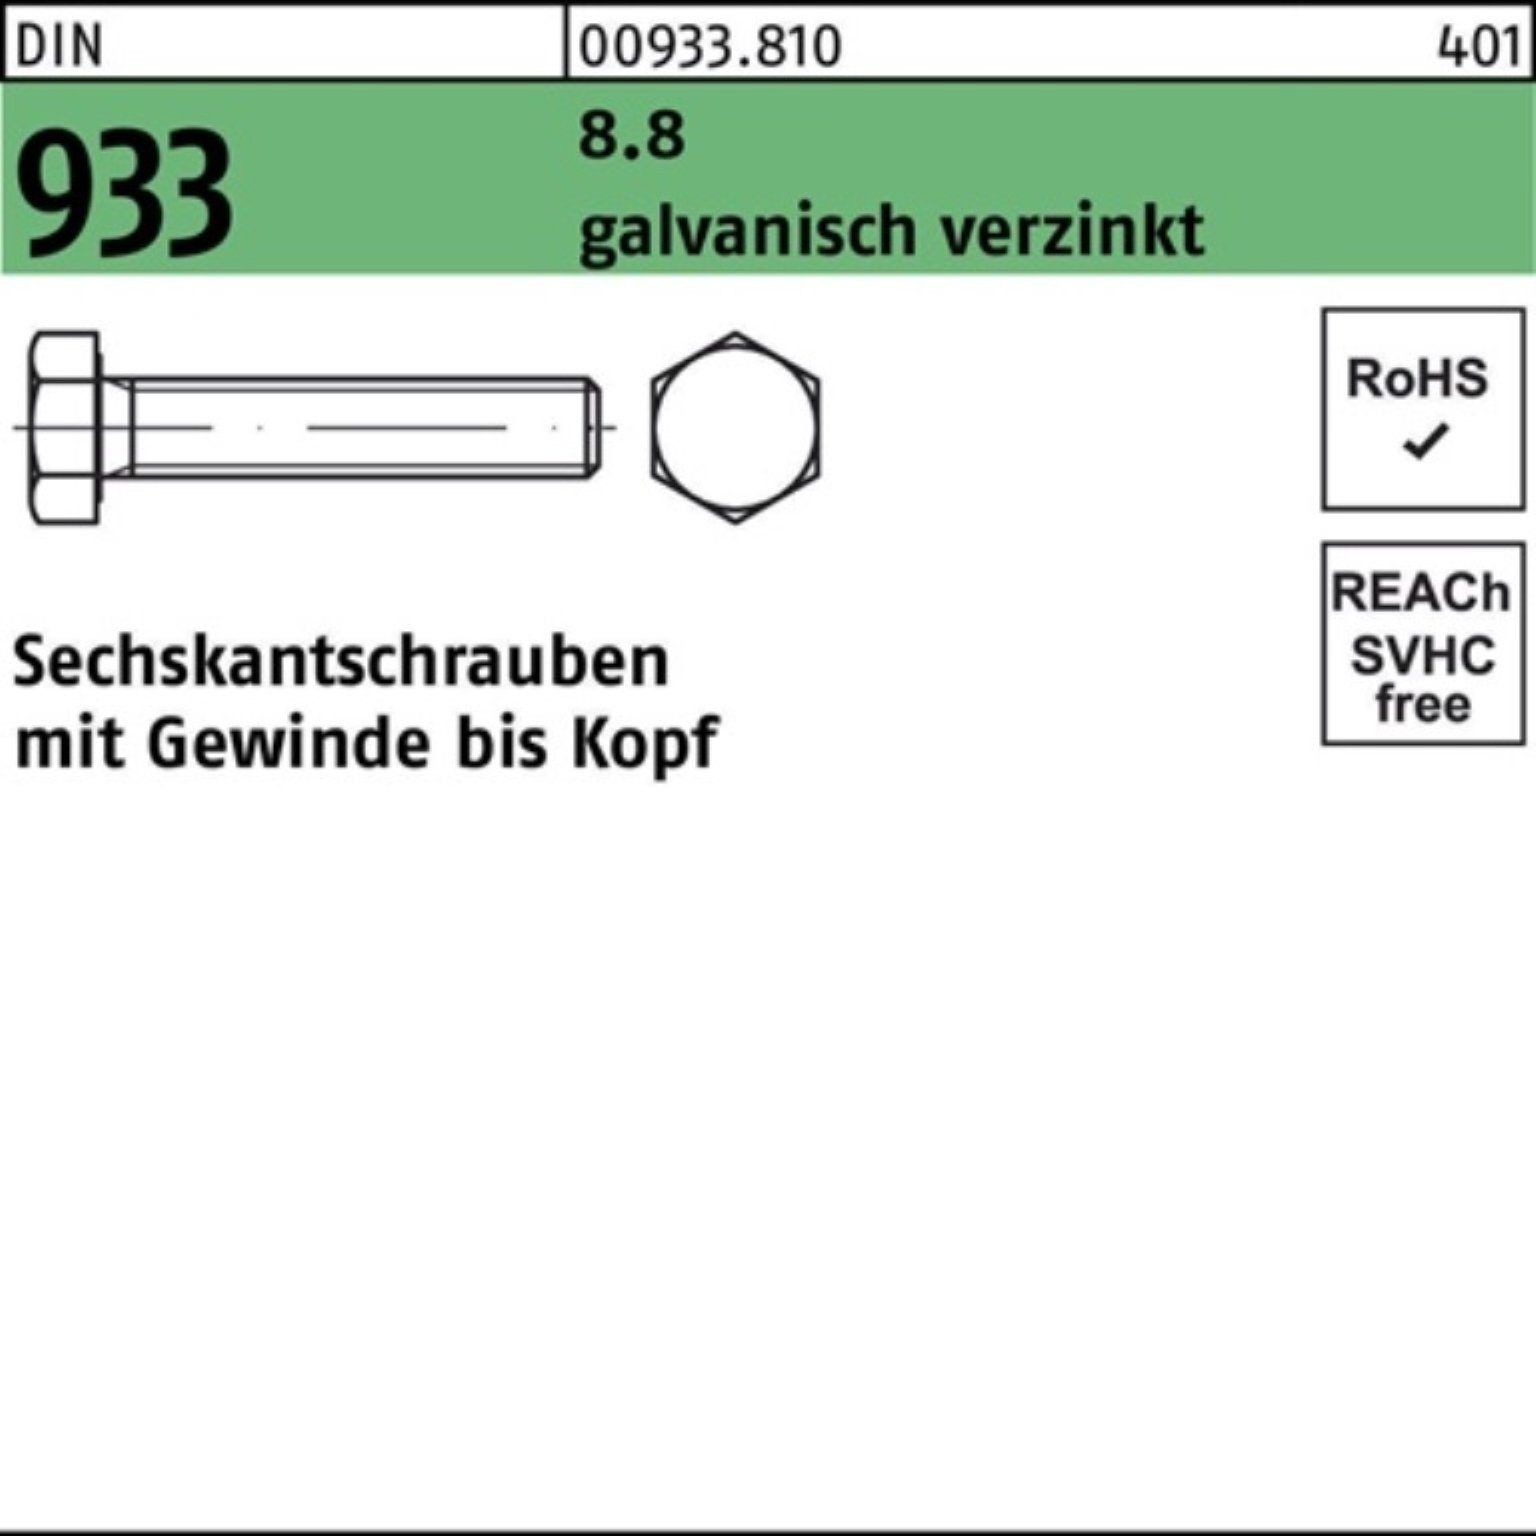 Sechskantschraube Sechskantschraube Pack 8.8 galv.verz. Stü Reyher M5x VG 25 100 DIN 100er 933